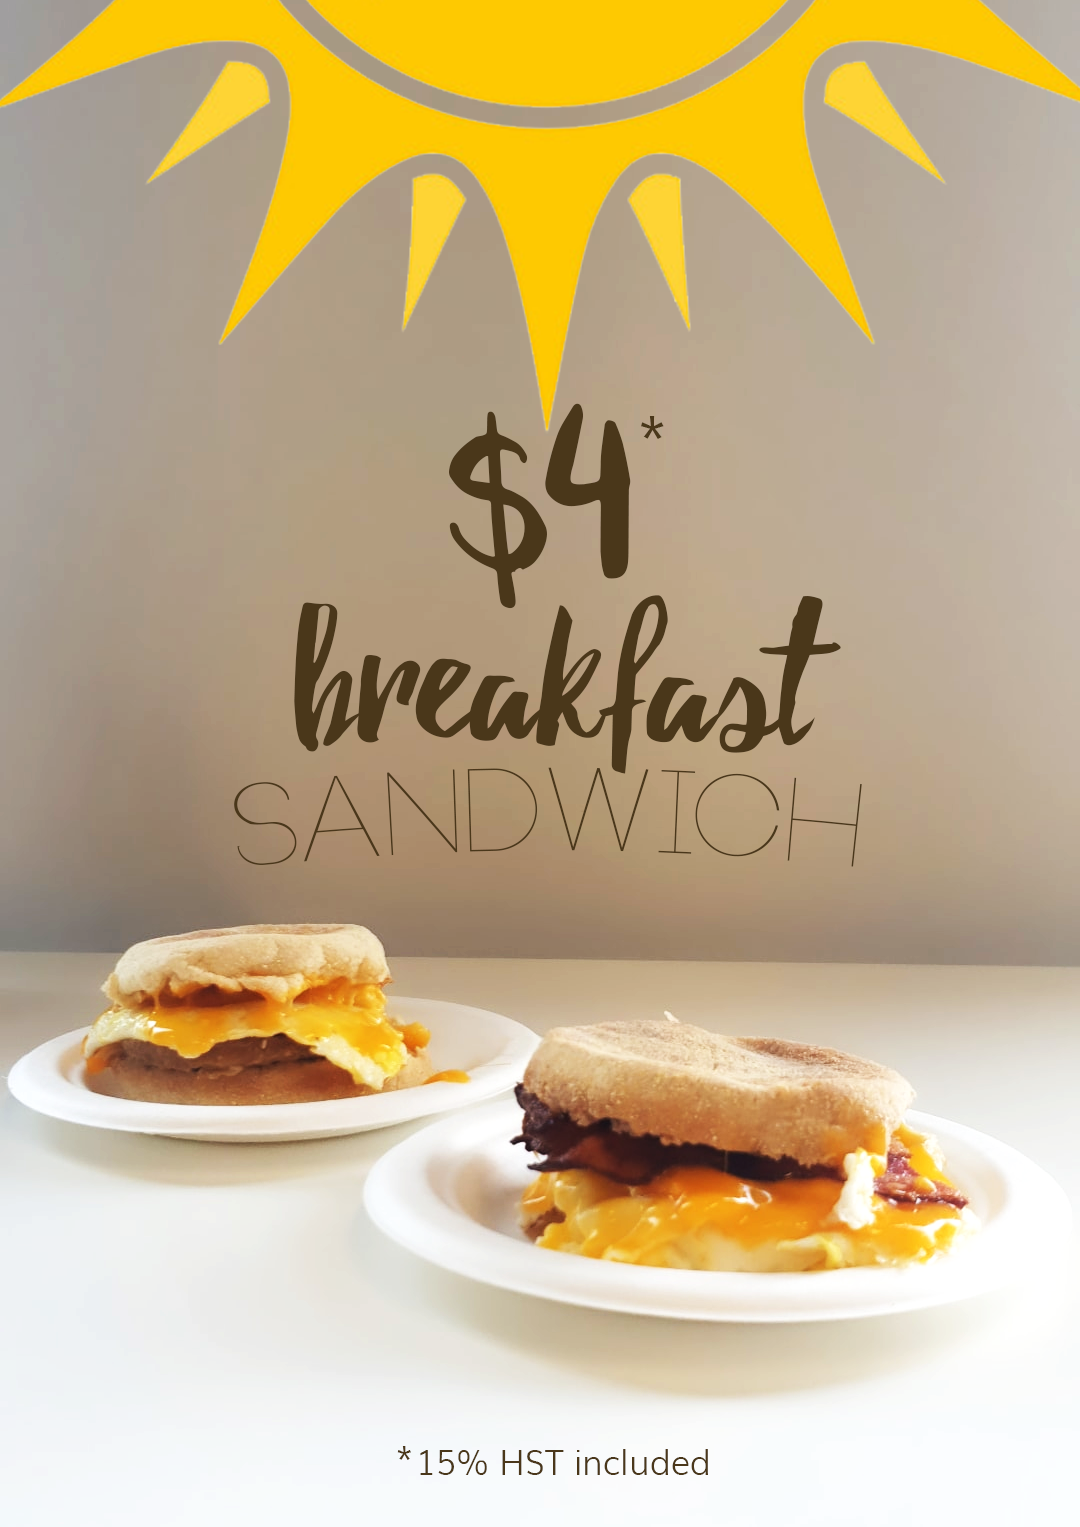 $4 Breakfast Sandwich at New Leaf Cafe (Burnside)